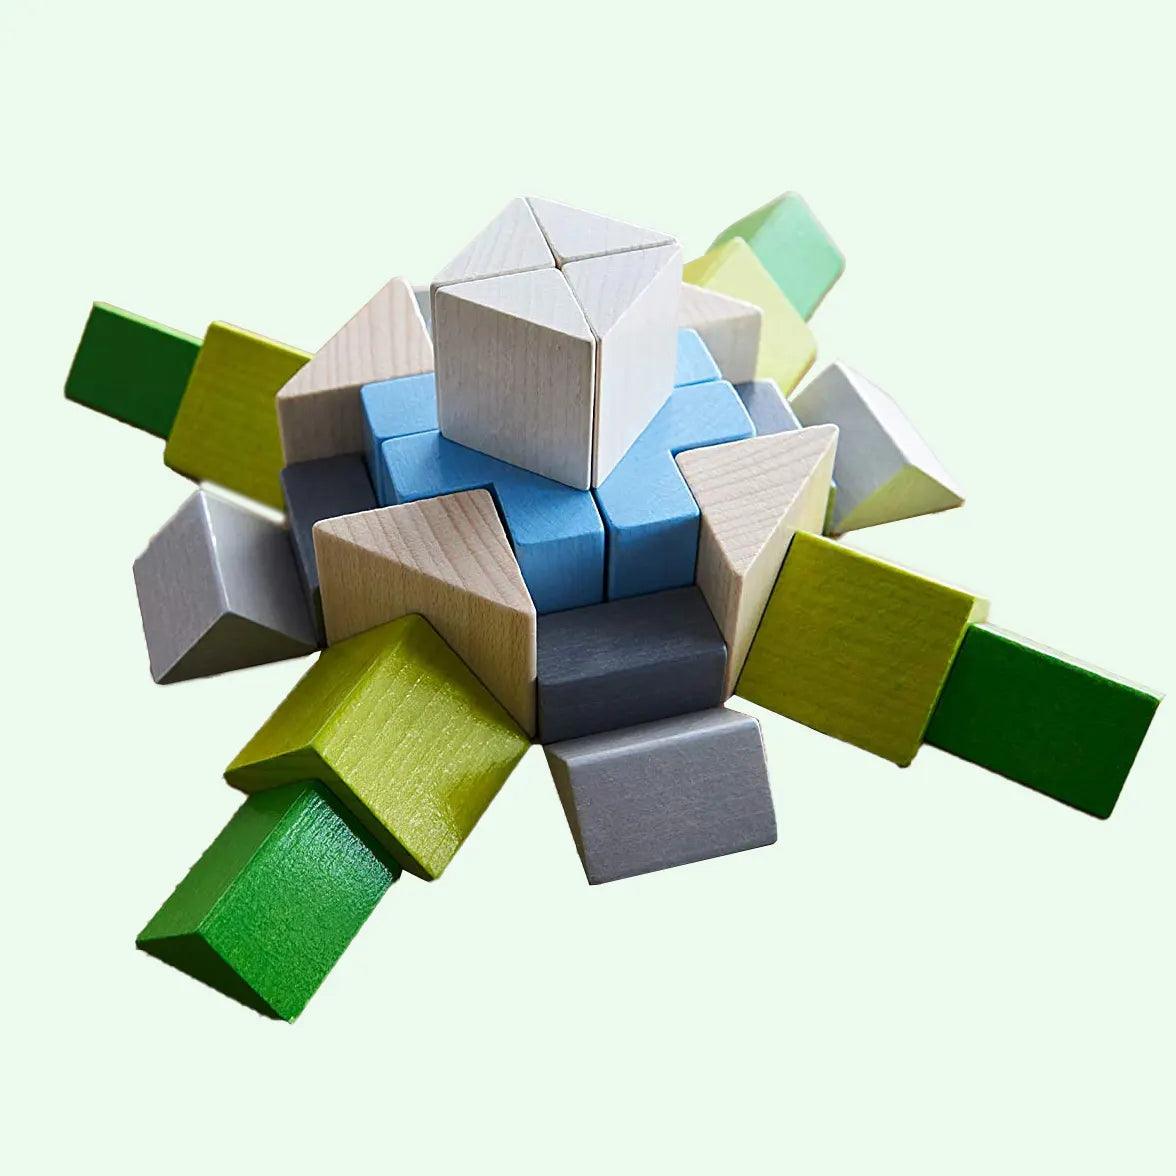 3D Wooden Block Mosaic Arranging Game - Zidar Kid